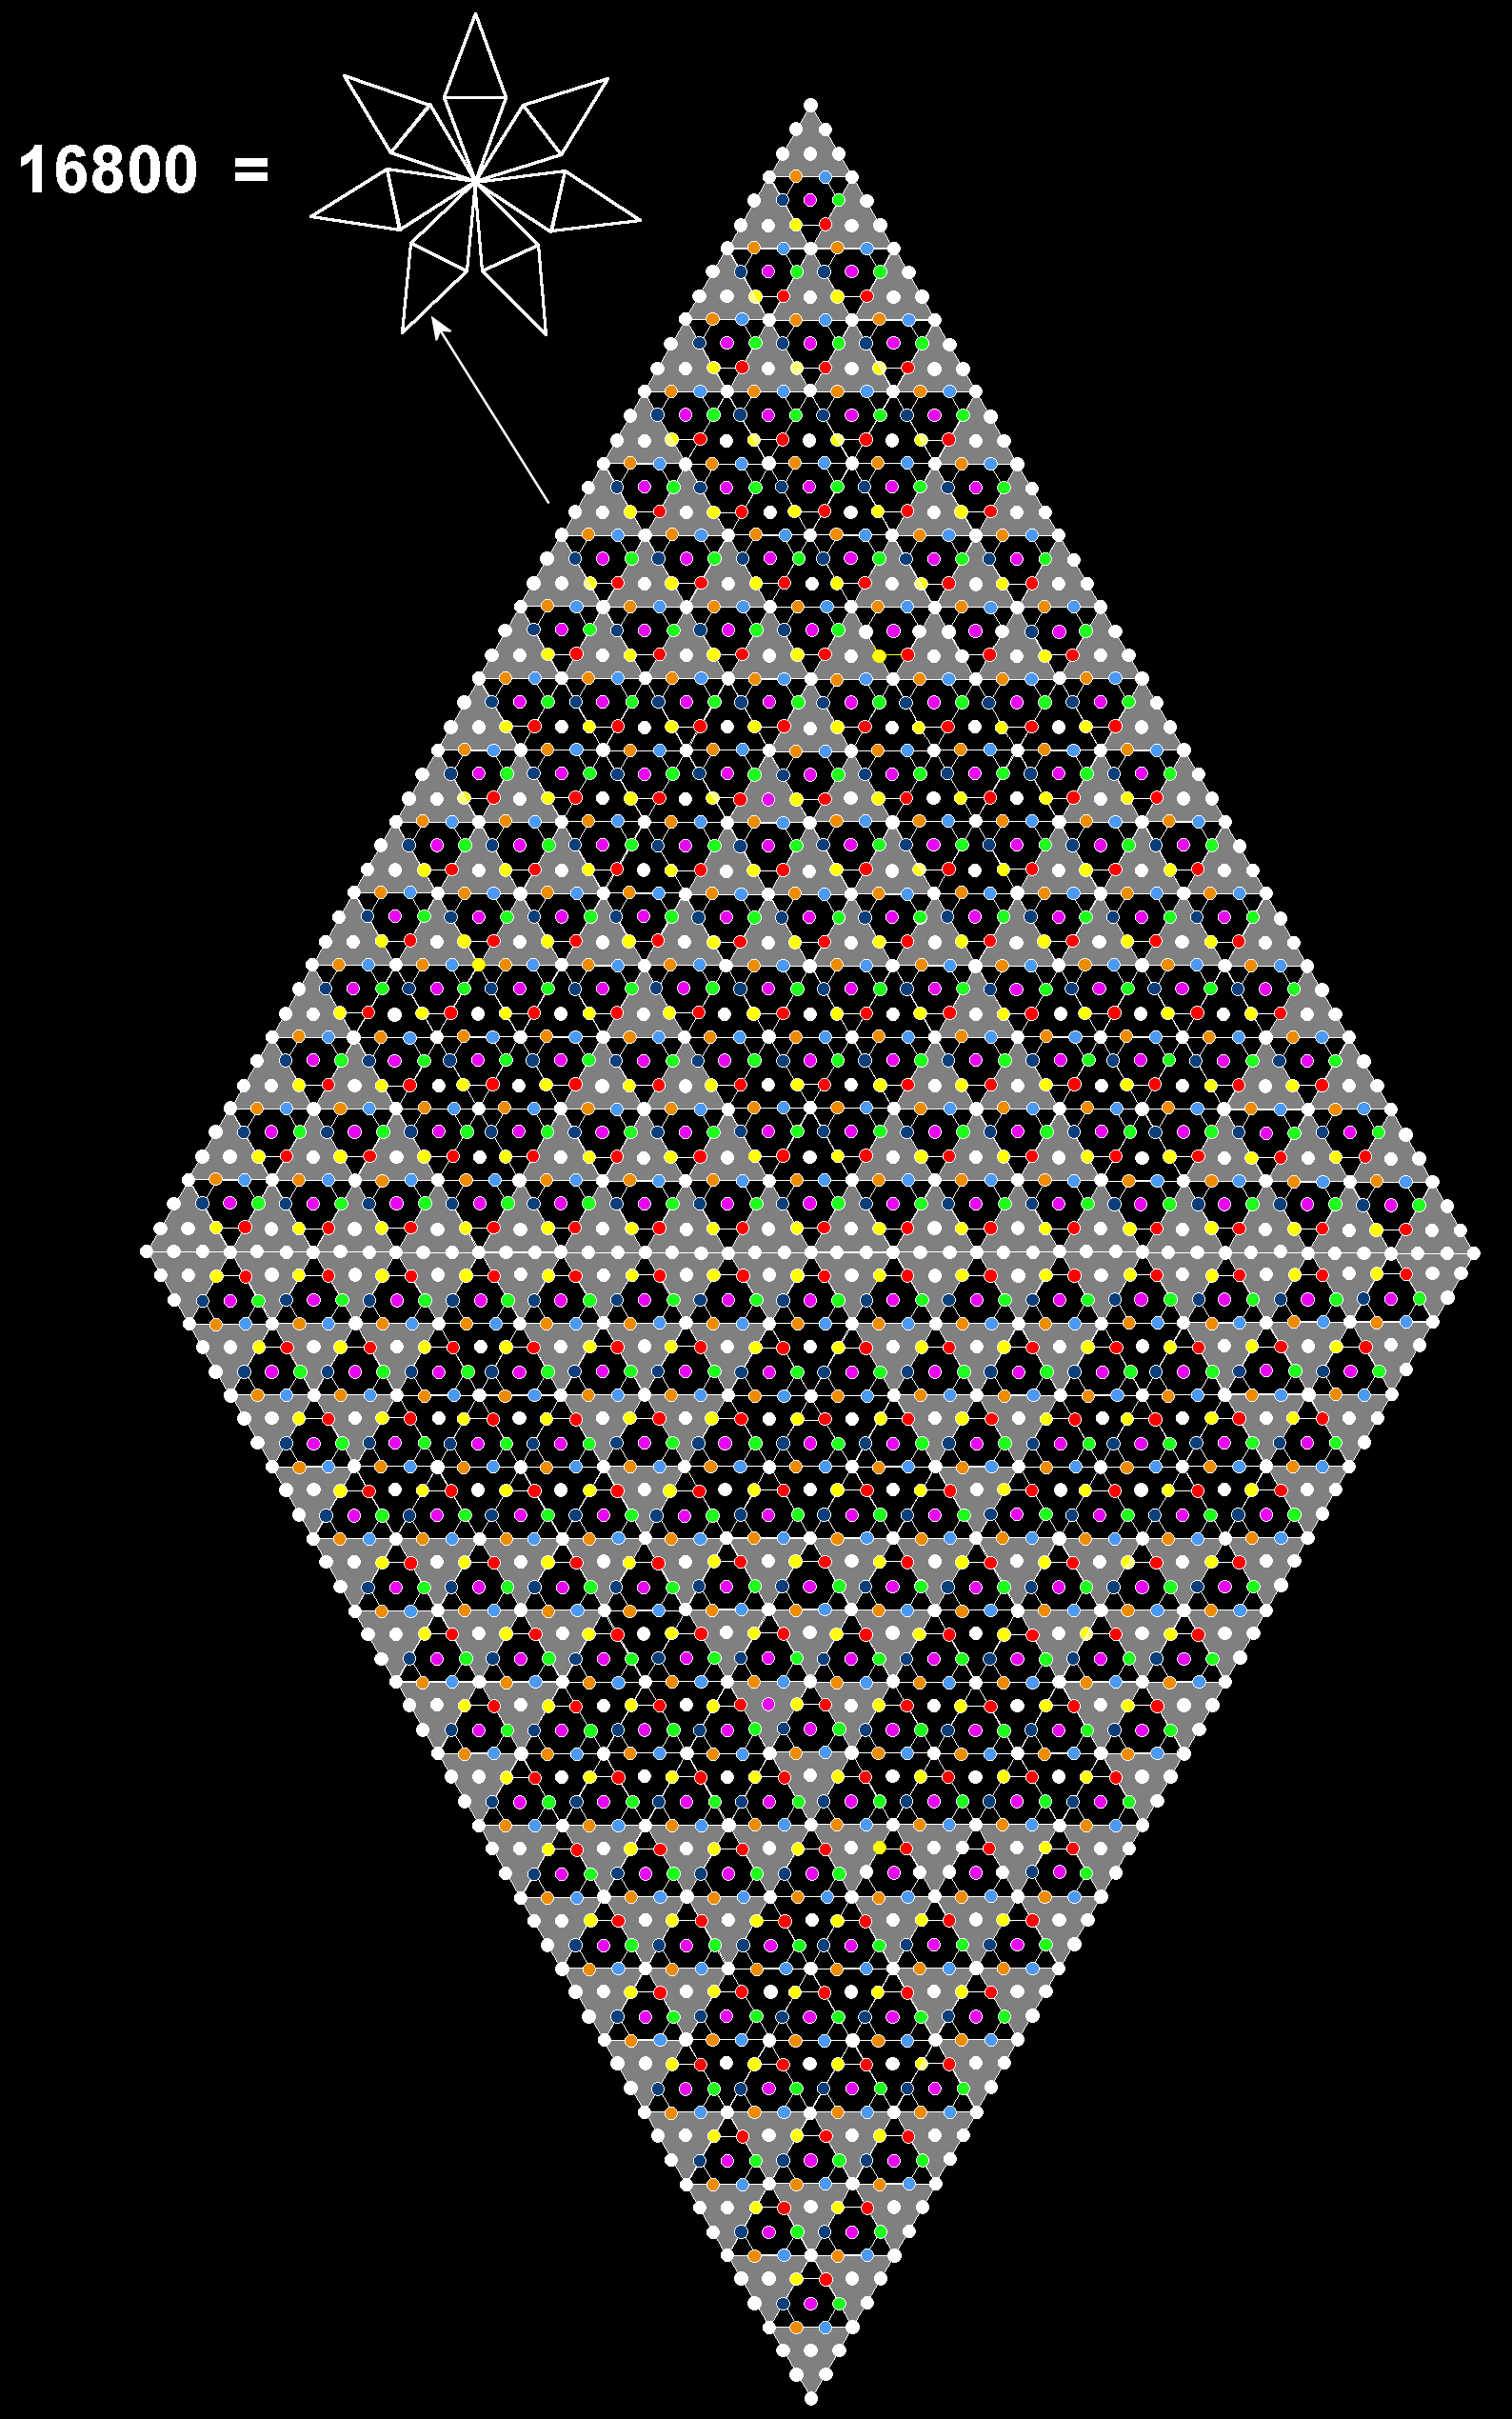 Parallelogram representation of 16800